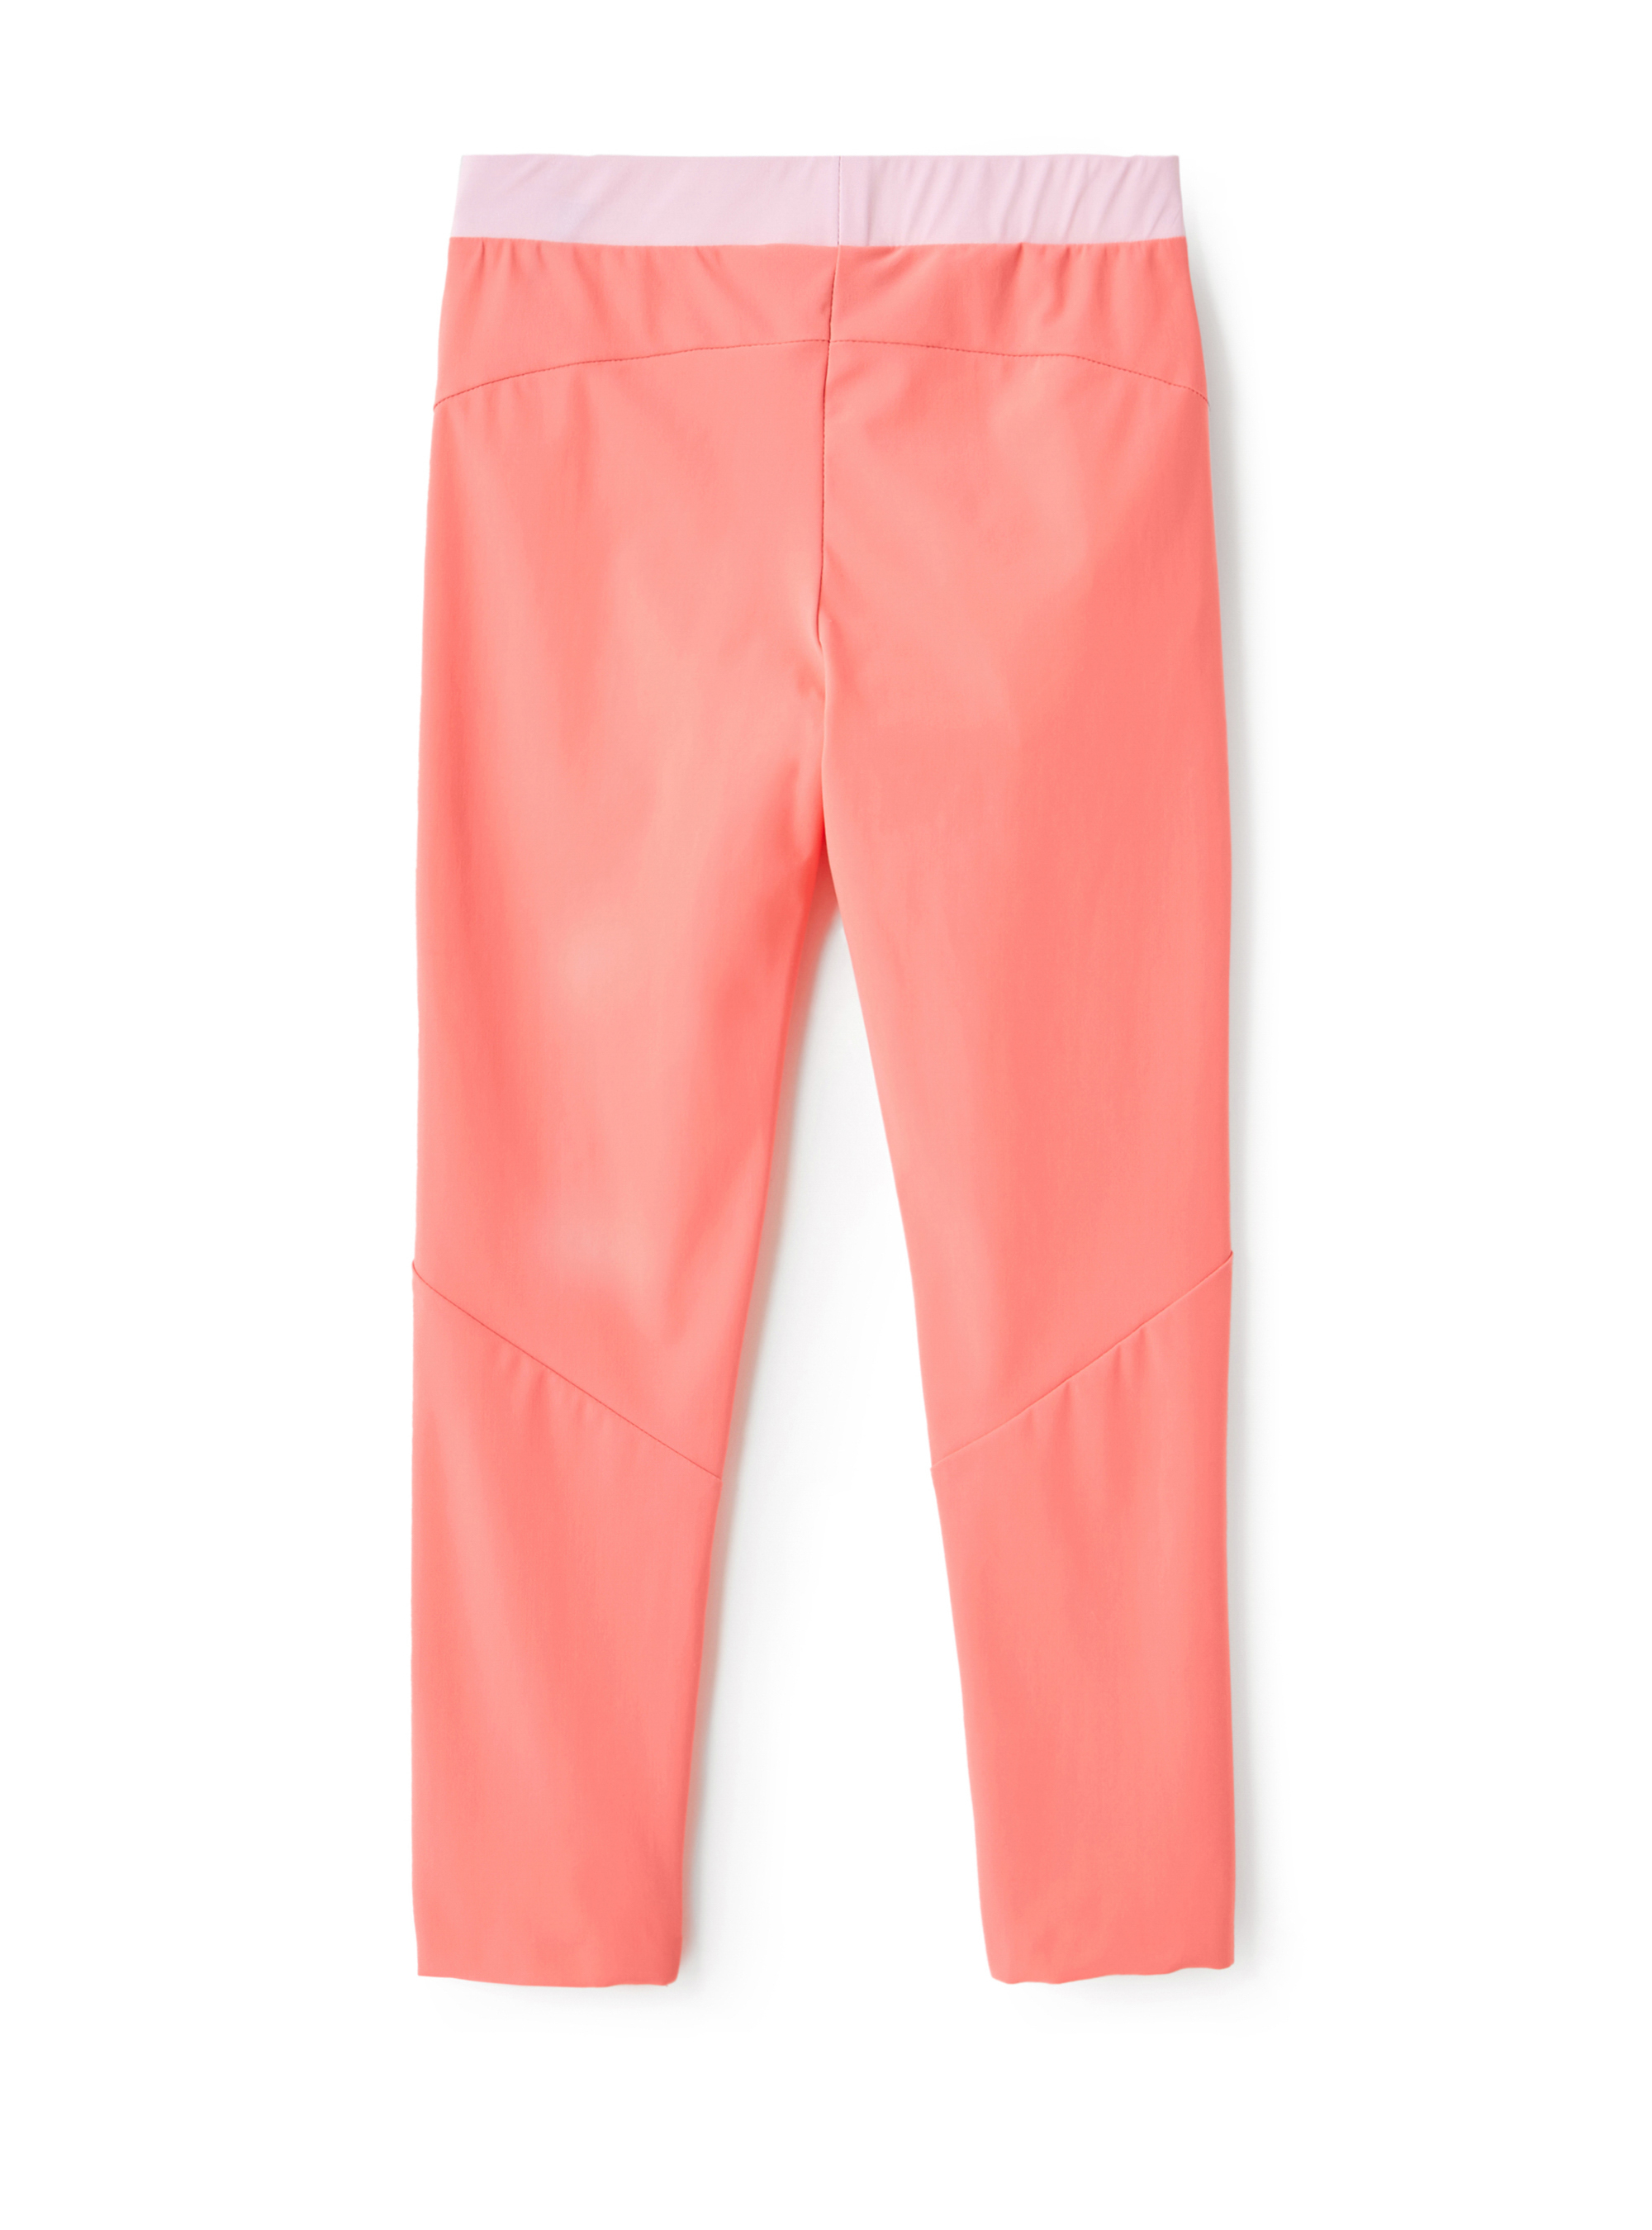 Pink leggings made of Sensitive® Fabric - Pink | Il Gufo